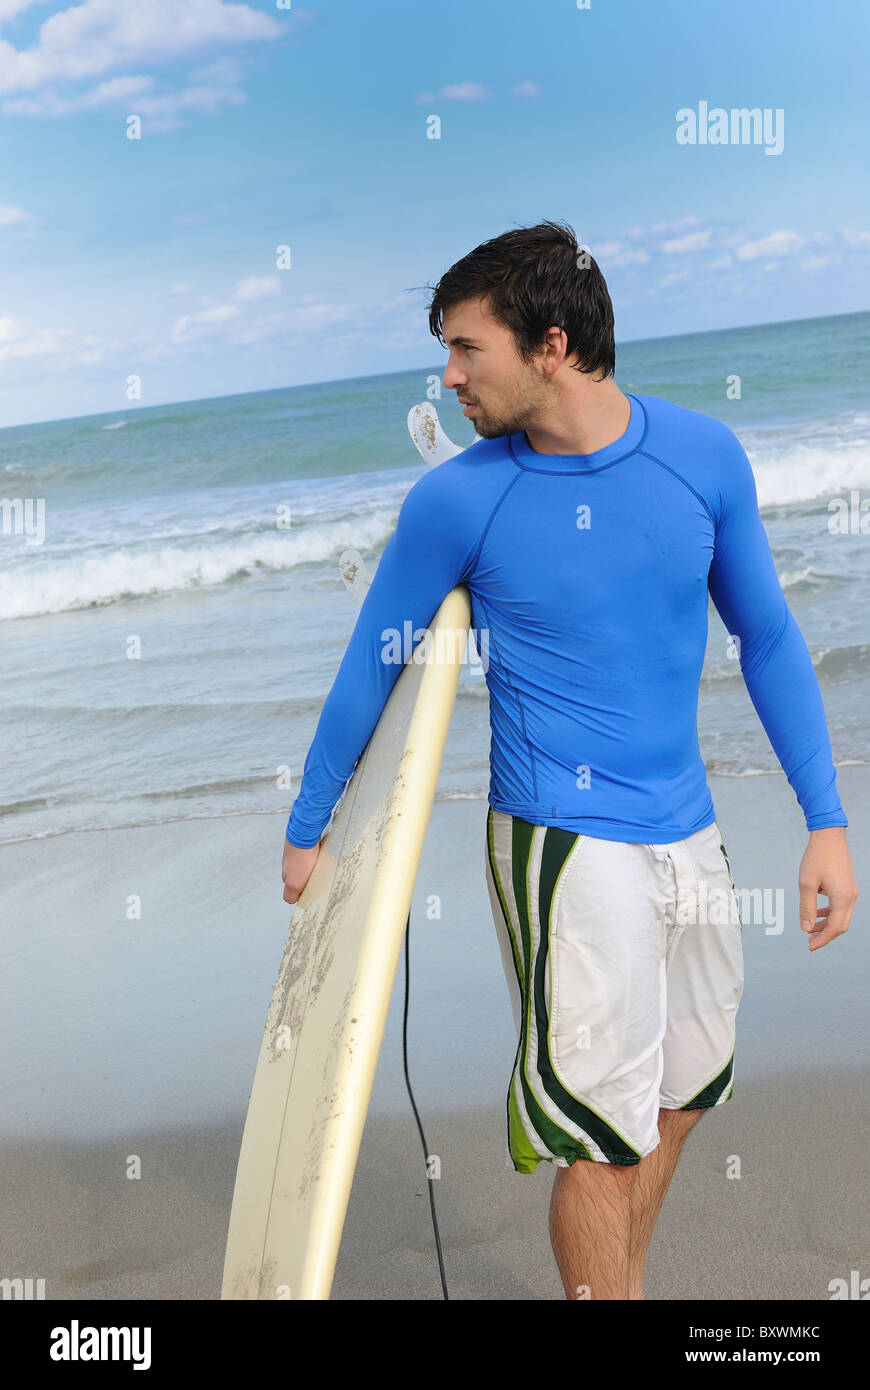 Man with surfboard on a florida beach. Stock Photo